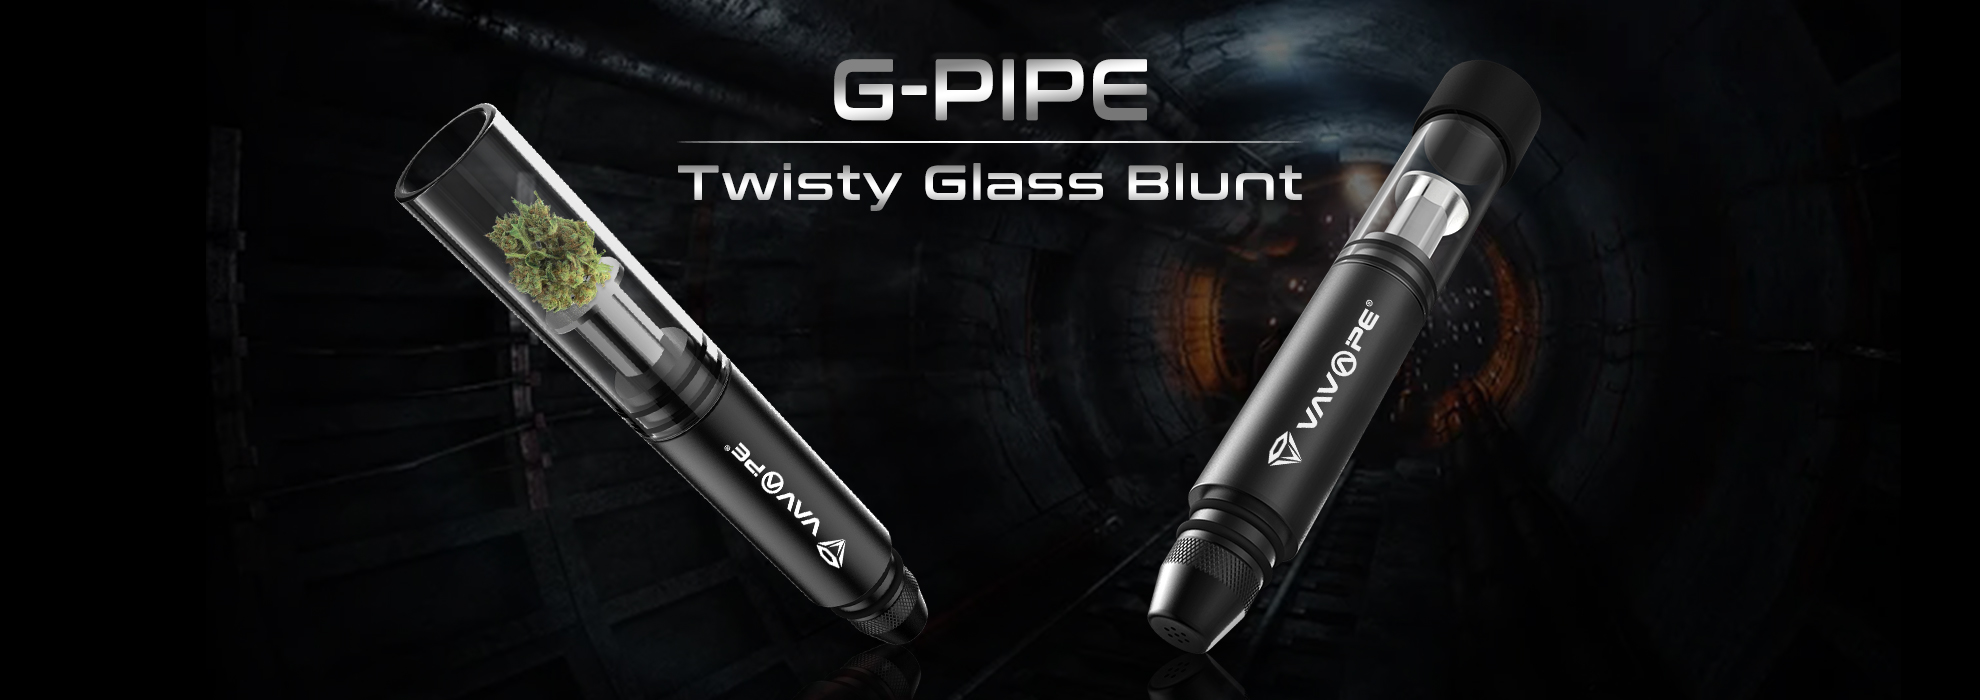 G-Pipe HyBird Glass Twist Blunt (Display of 16)